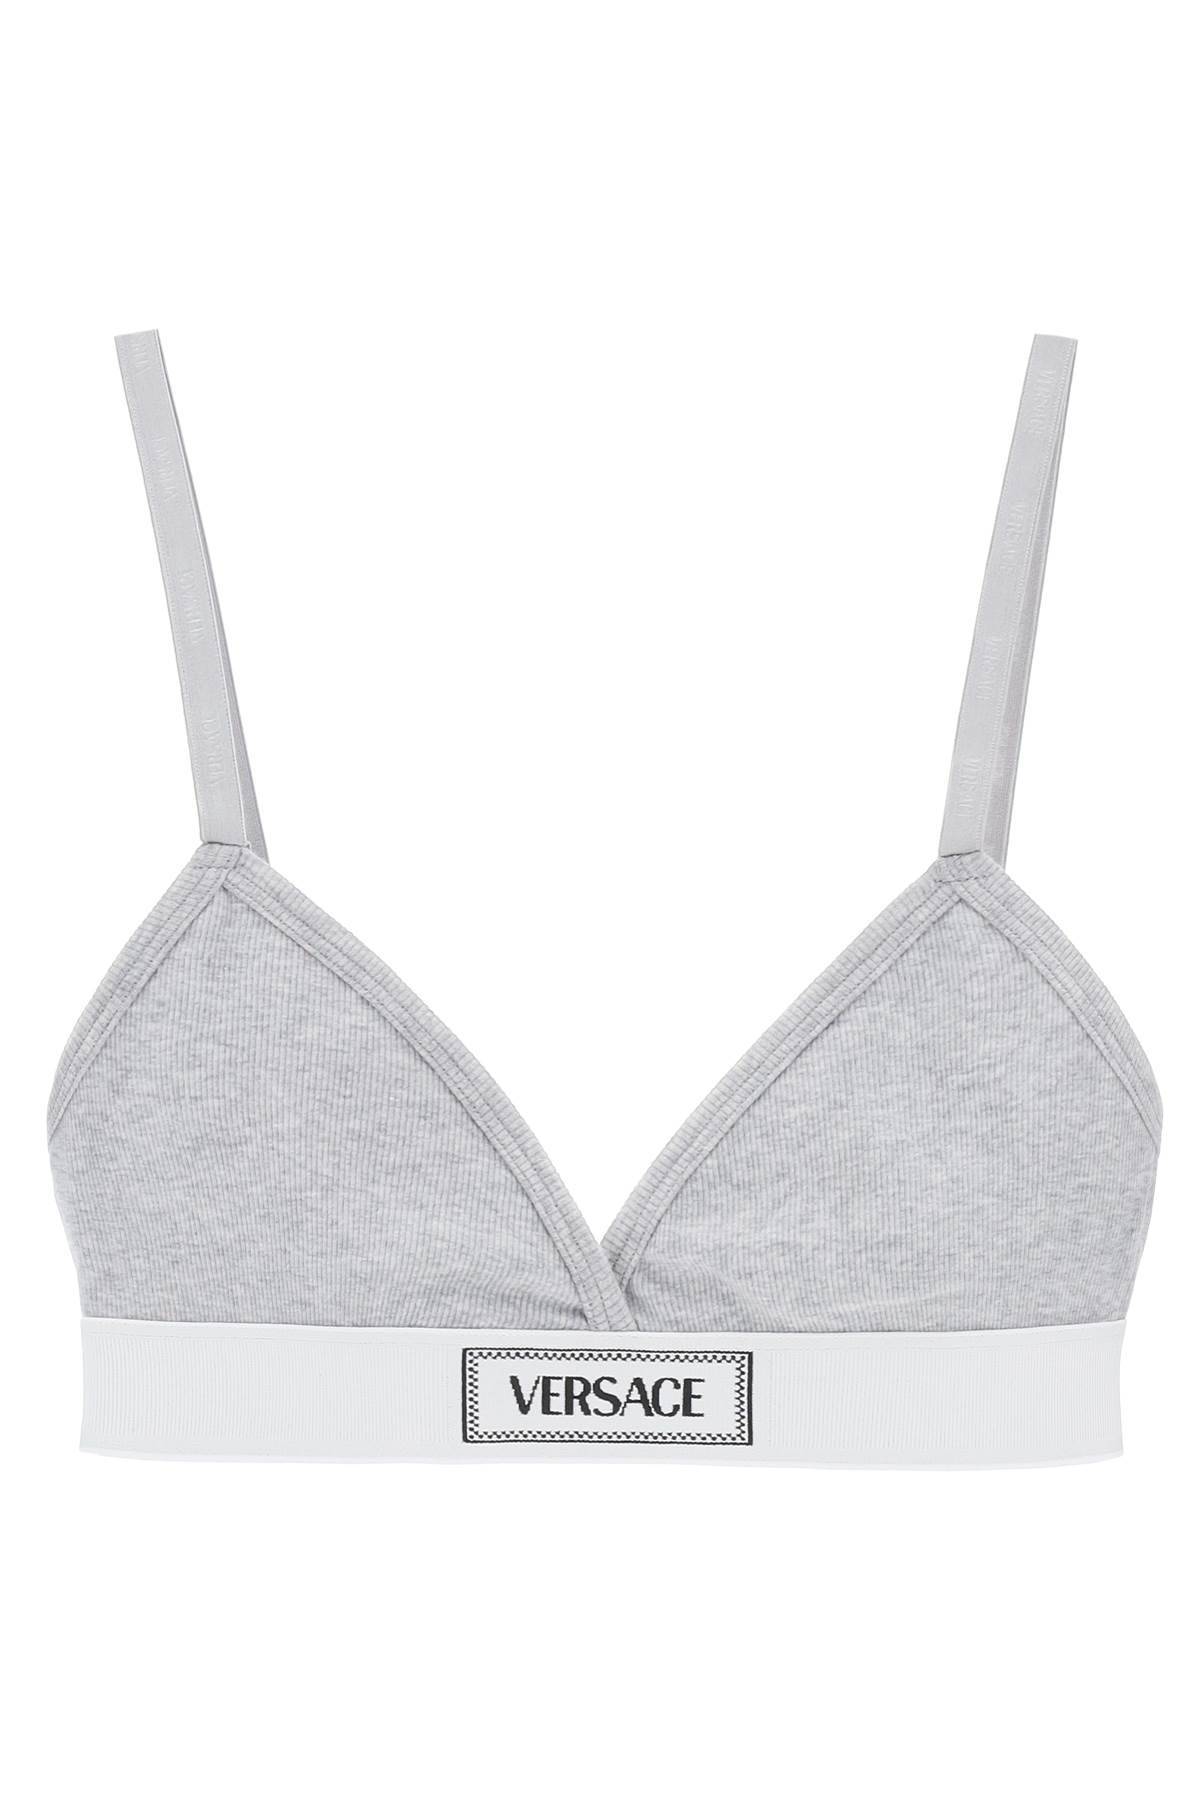 Versace VERSACE '90s logo ribbed bralette